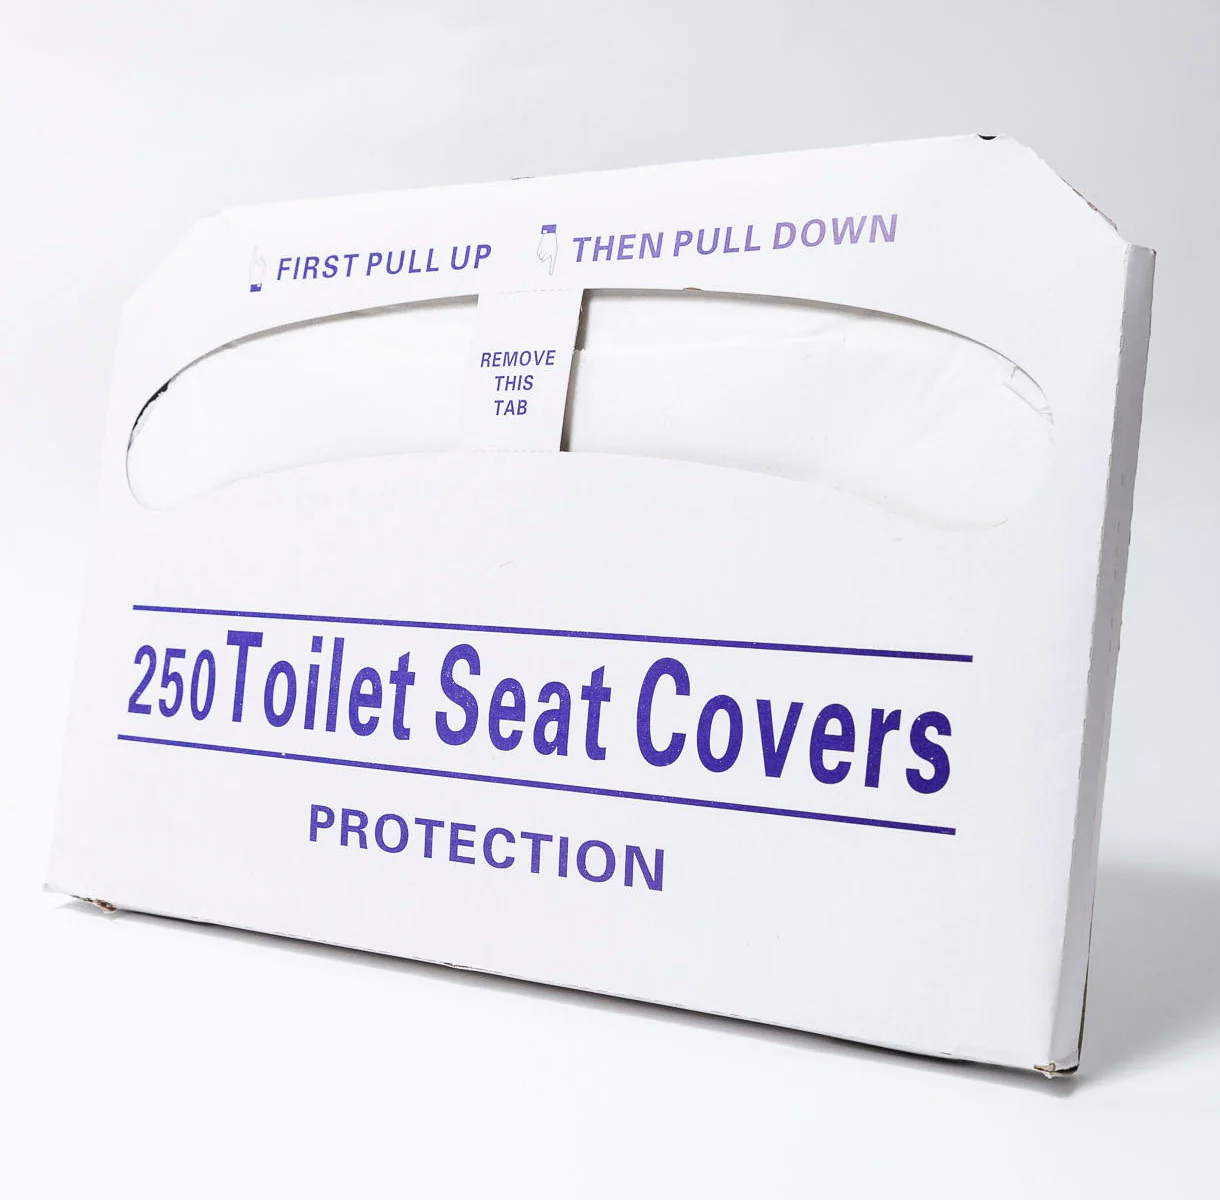 Disposable Toilet Seat Cover Market